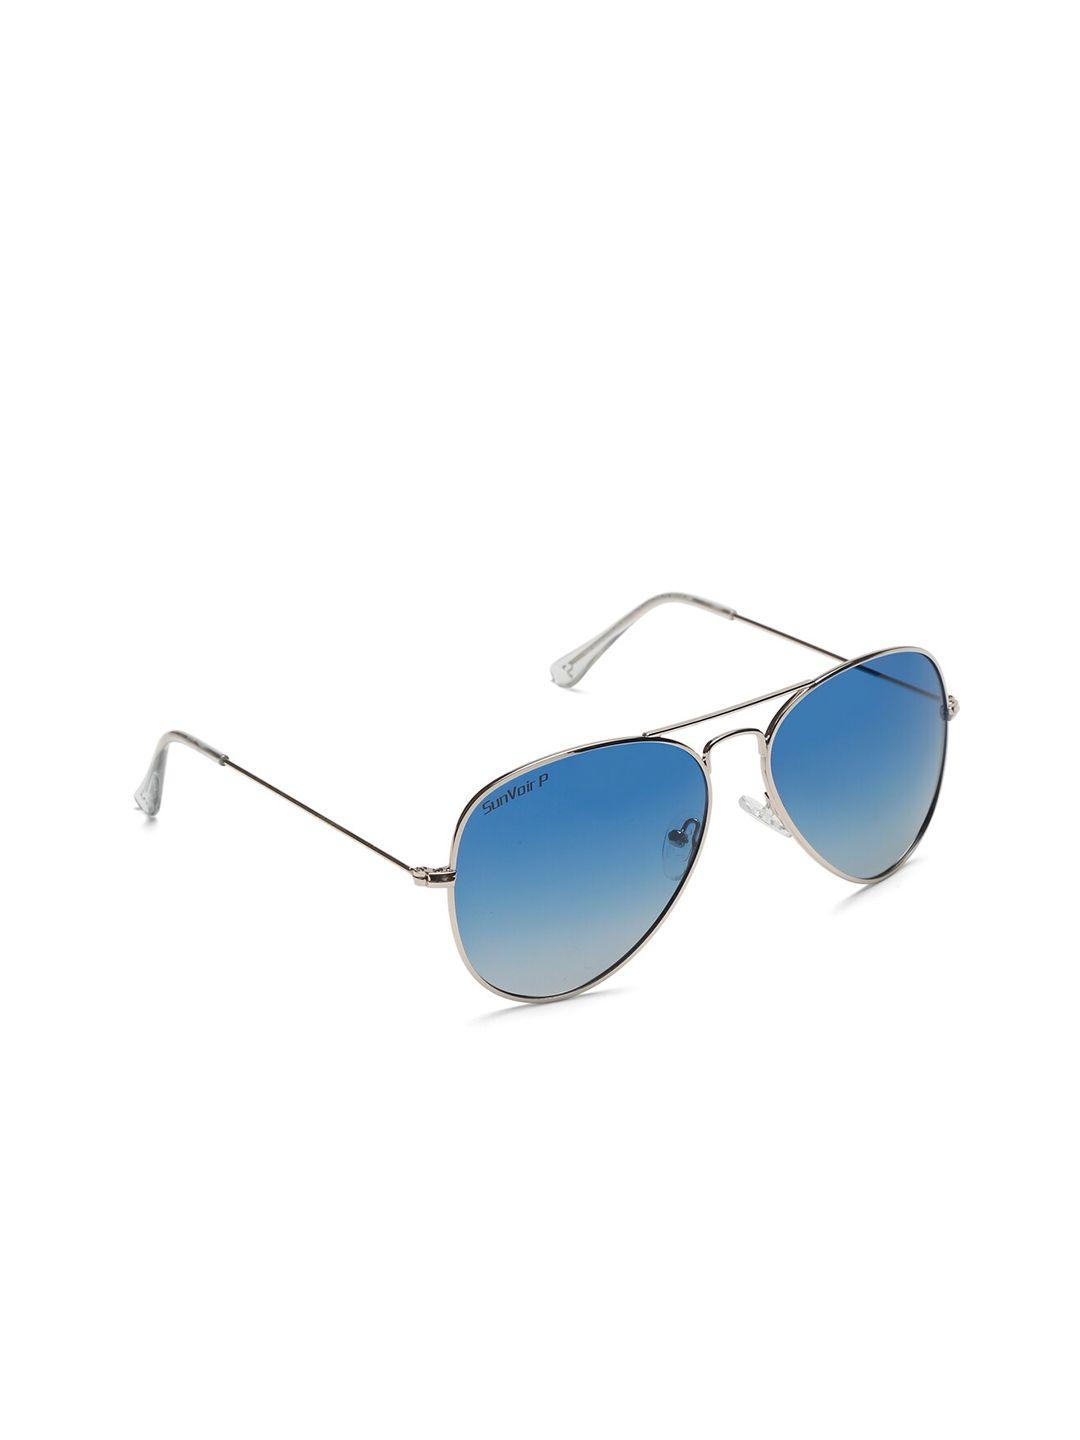 sunnies aviator sunglasses with polarised lens